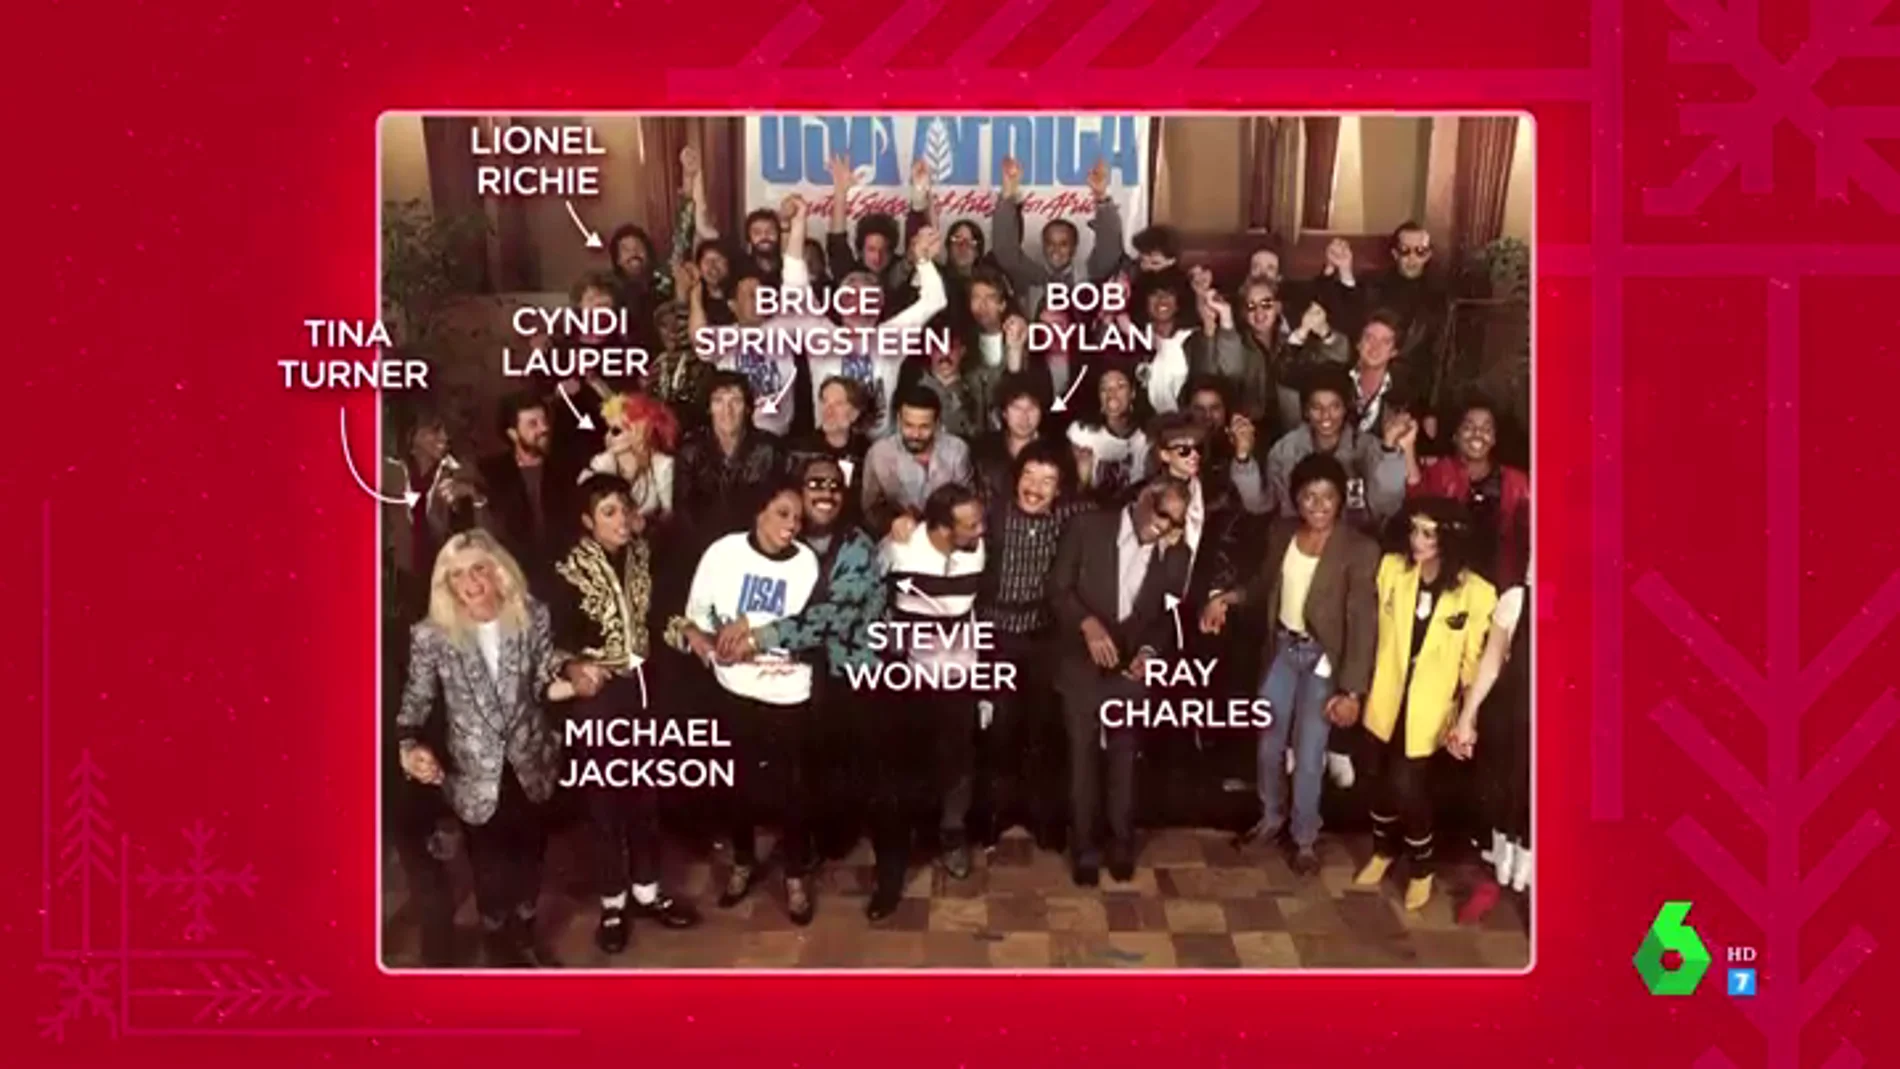 Michael Jackson, Tina Turner, Bob Dylan... analizamos la foto del primer himno solidario: 'We are the world'